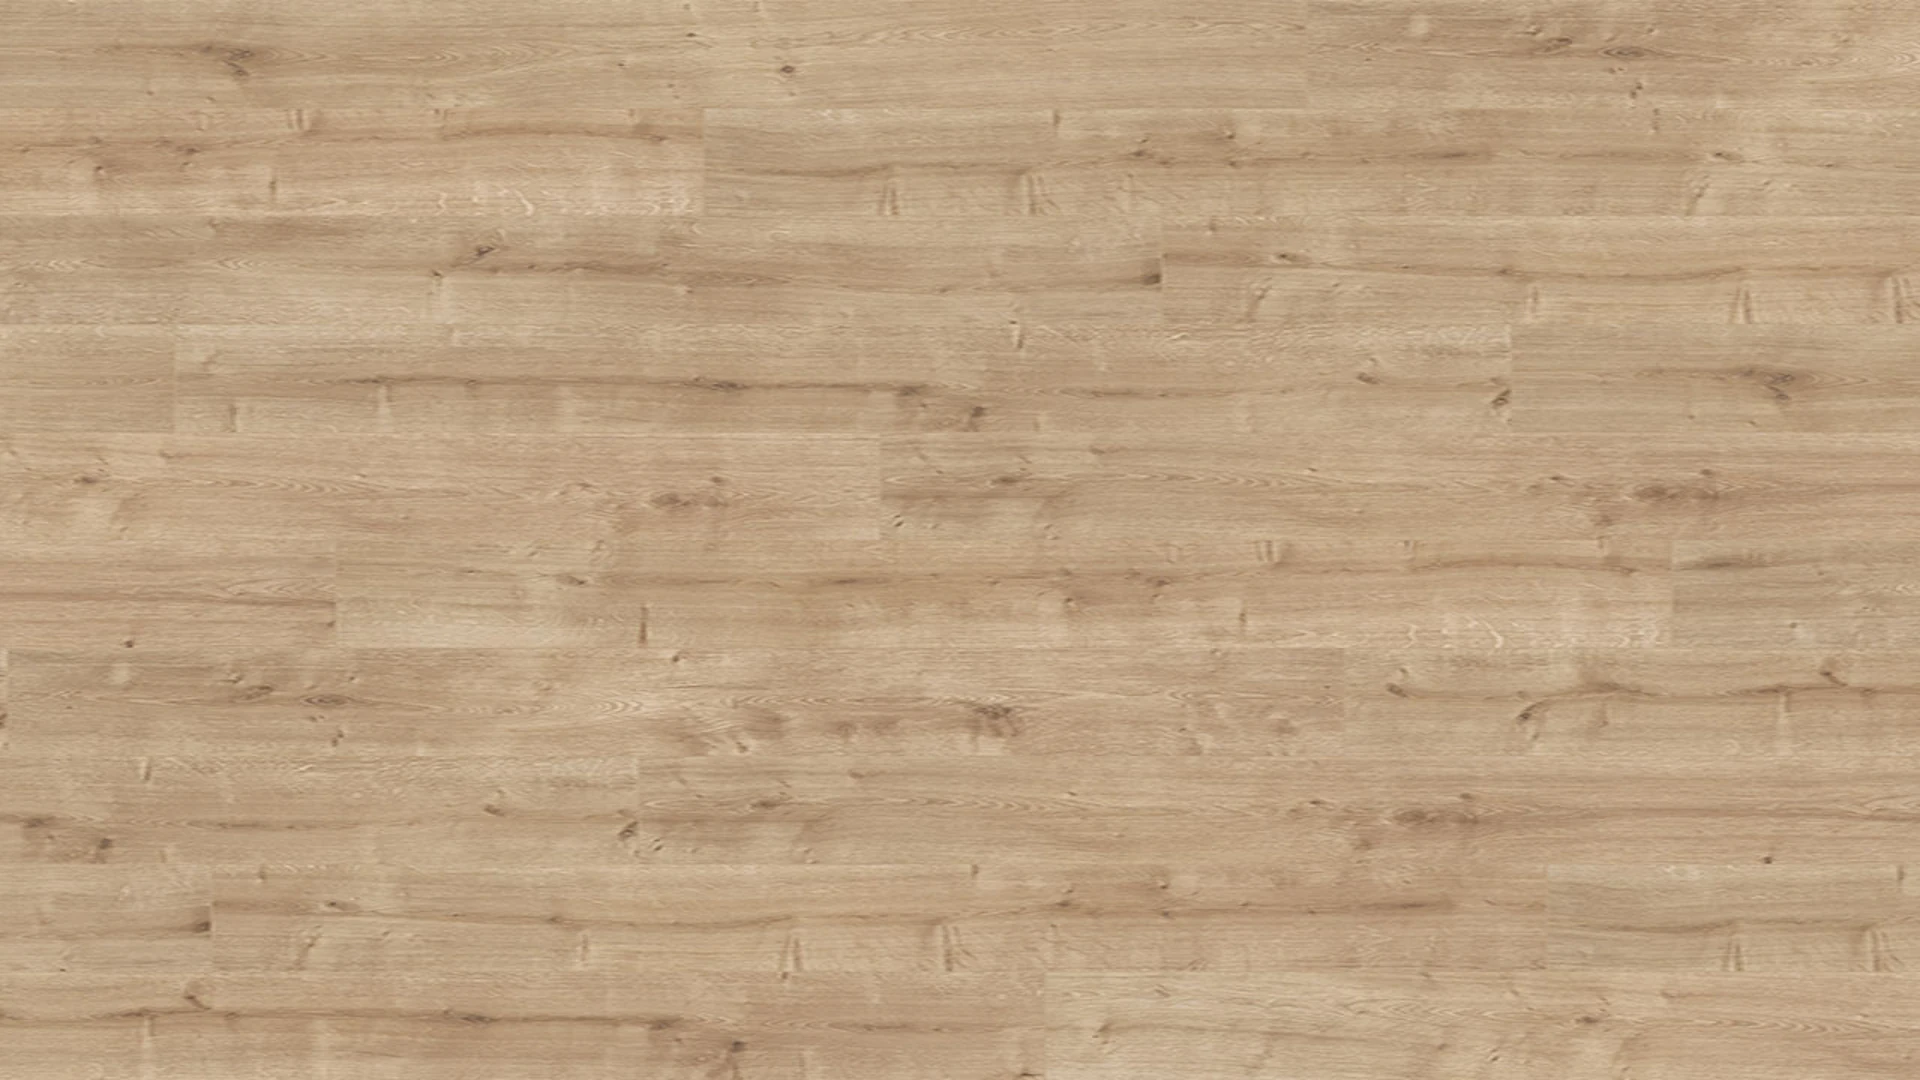 Parador laminate flooring - Basic 600 wide plank oak sanded minifase